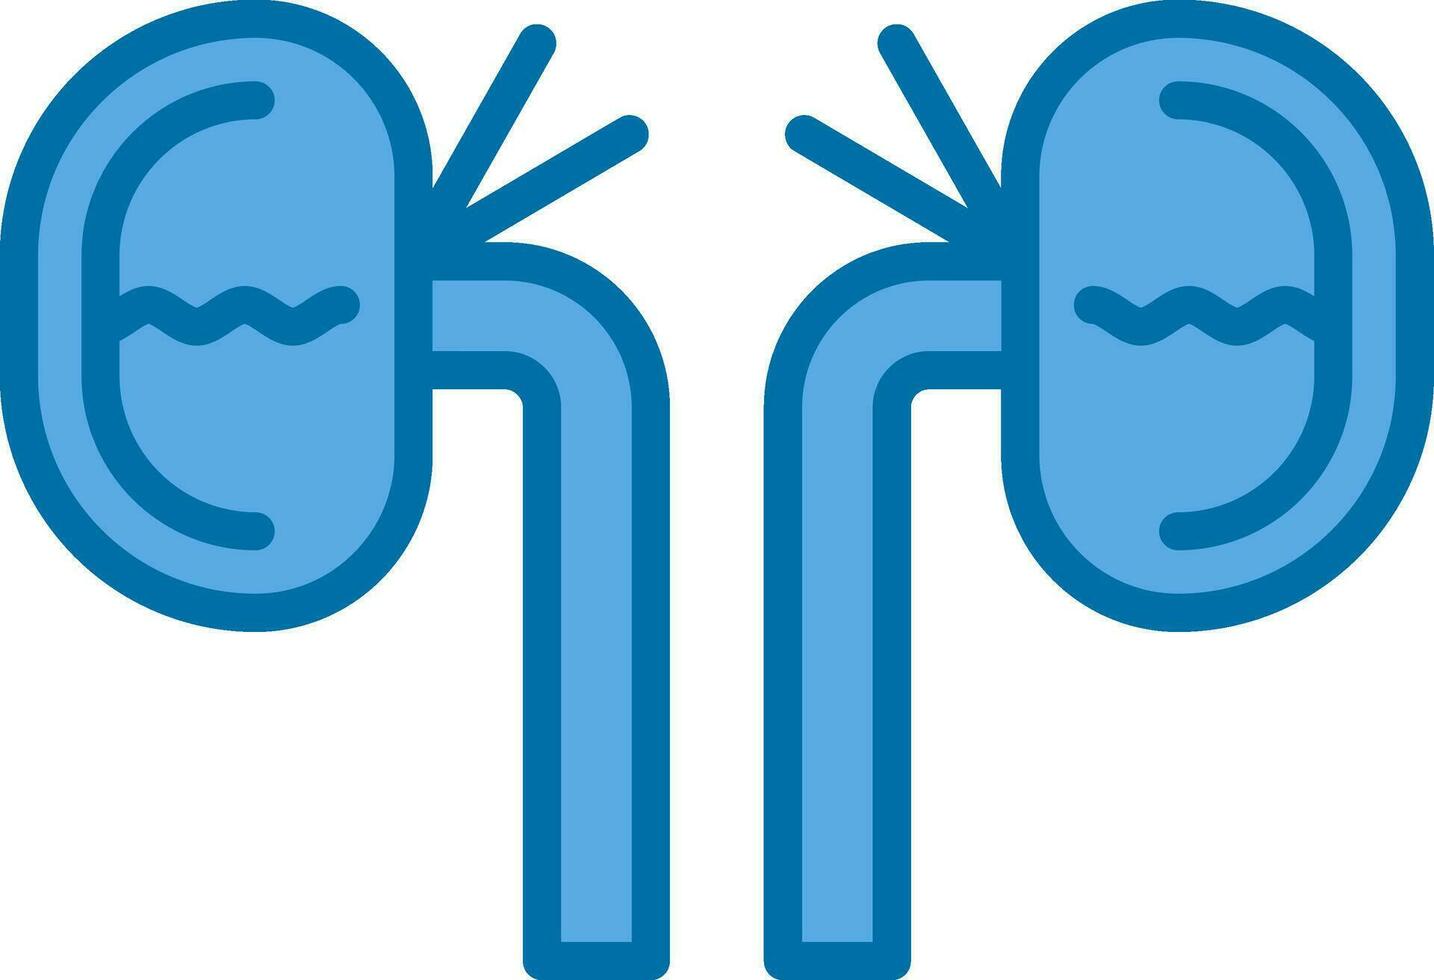 Kidney Vector Icon Design